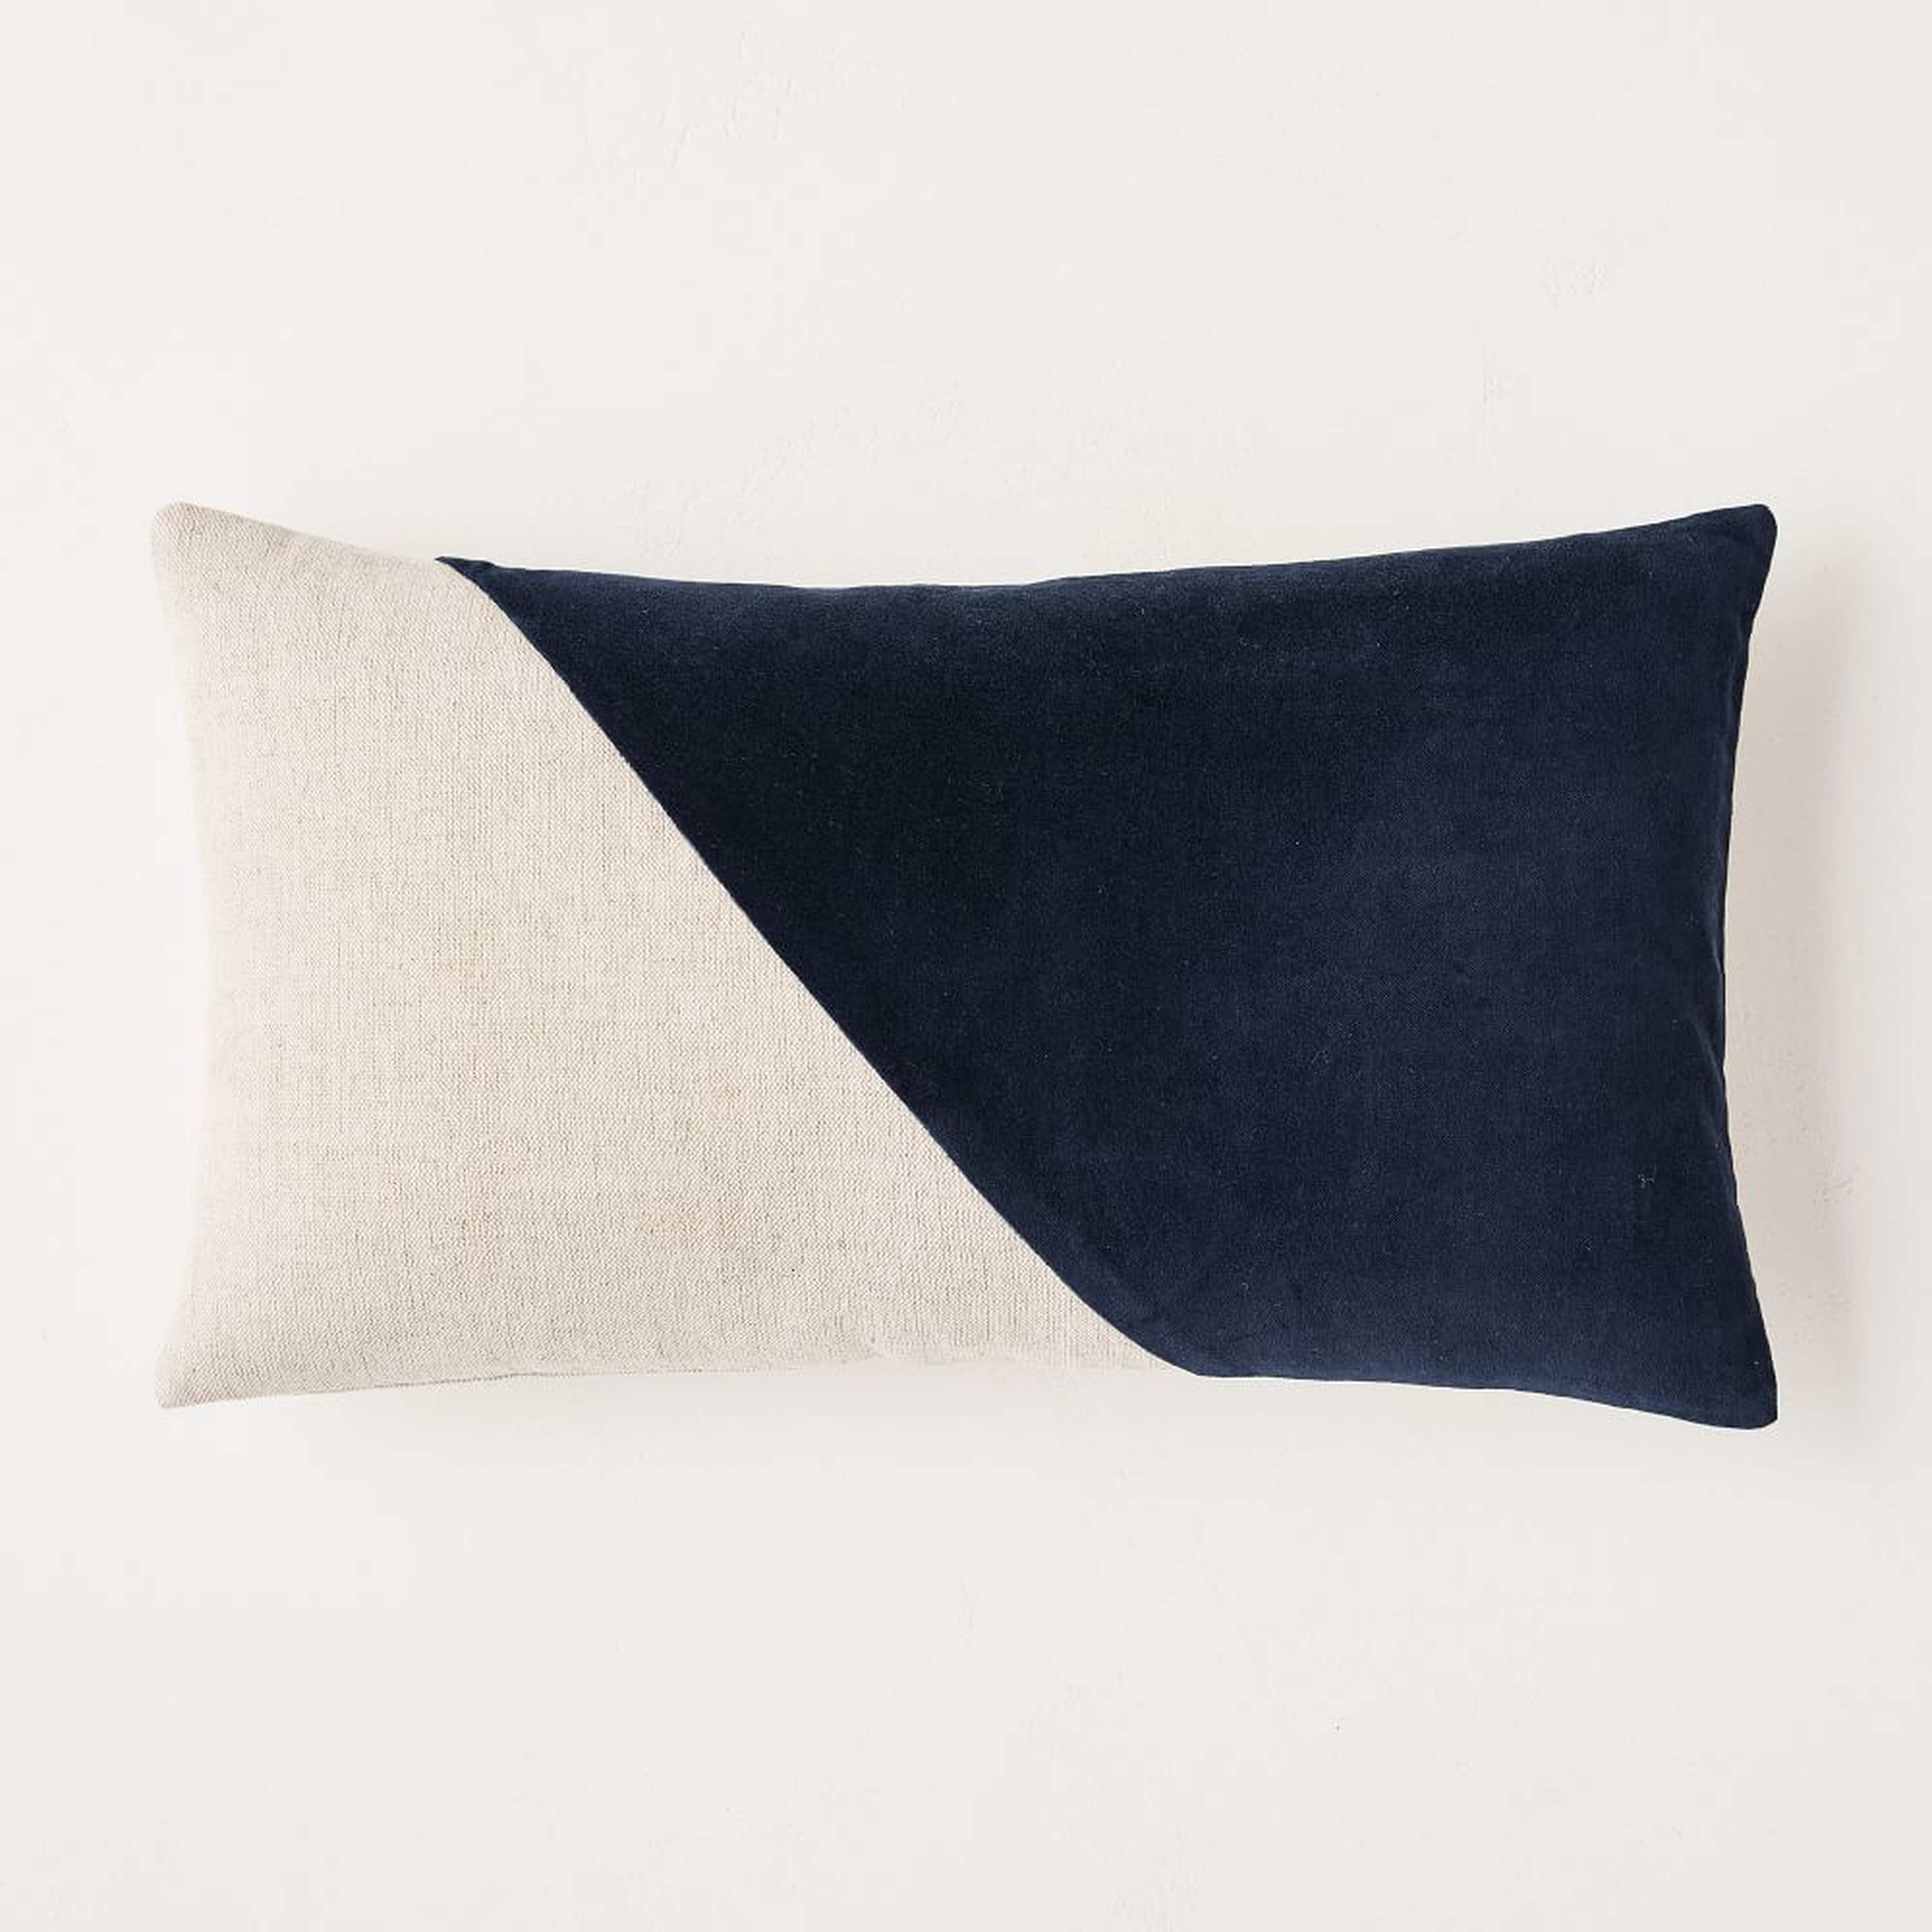 Cotton Linen + Velvet Corners Pillow Cover, 12"x21", Midnight, Set of 2 - West Elm